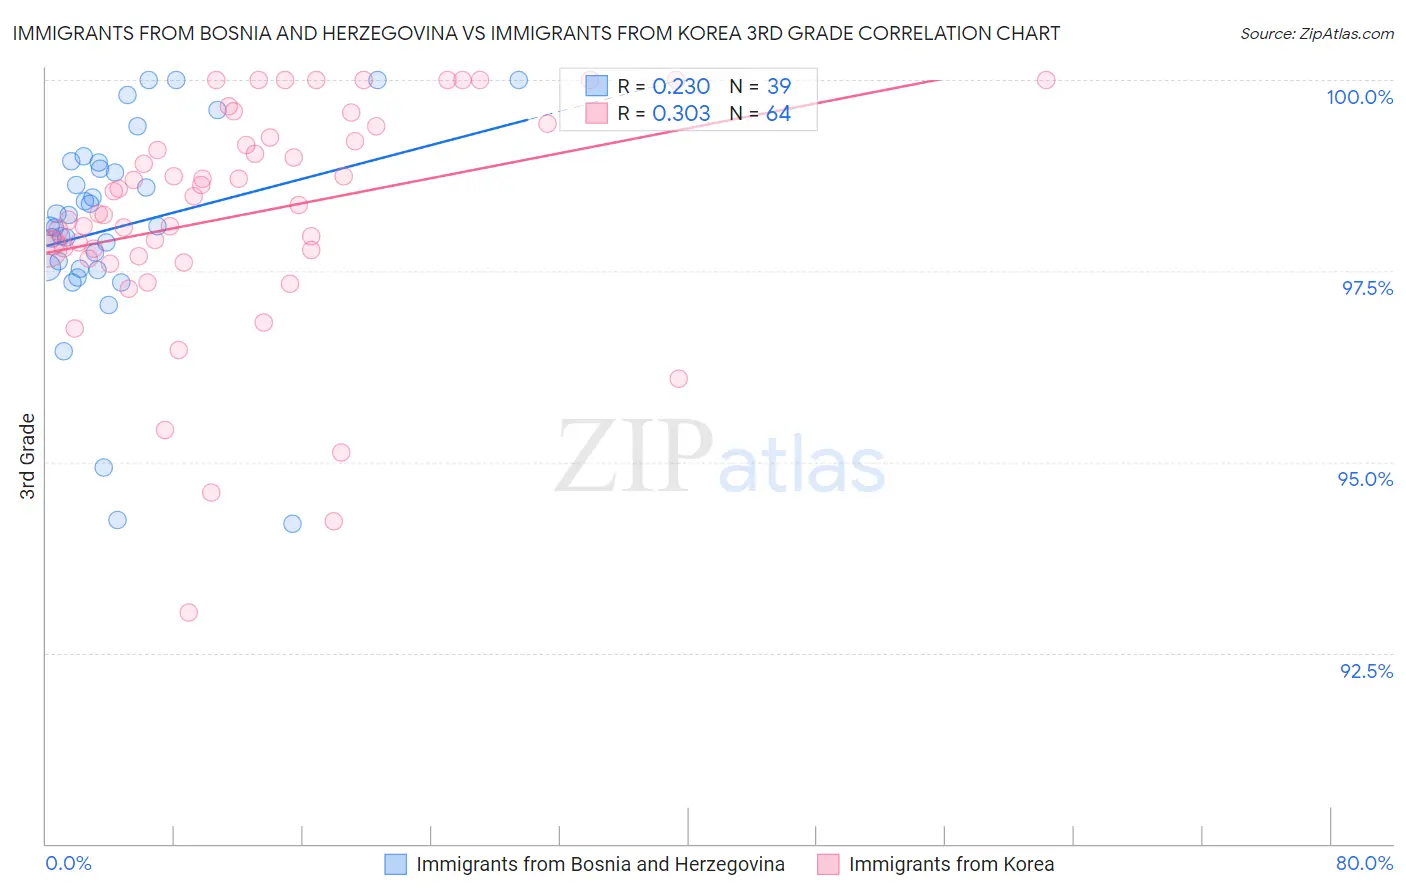 Immigrants from Bosnia and Herzegovina vs Immigrants from Korea 3rd Grade